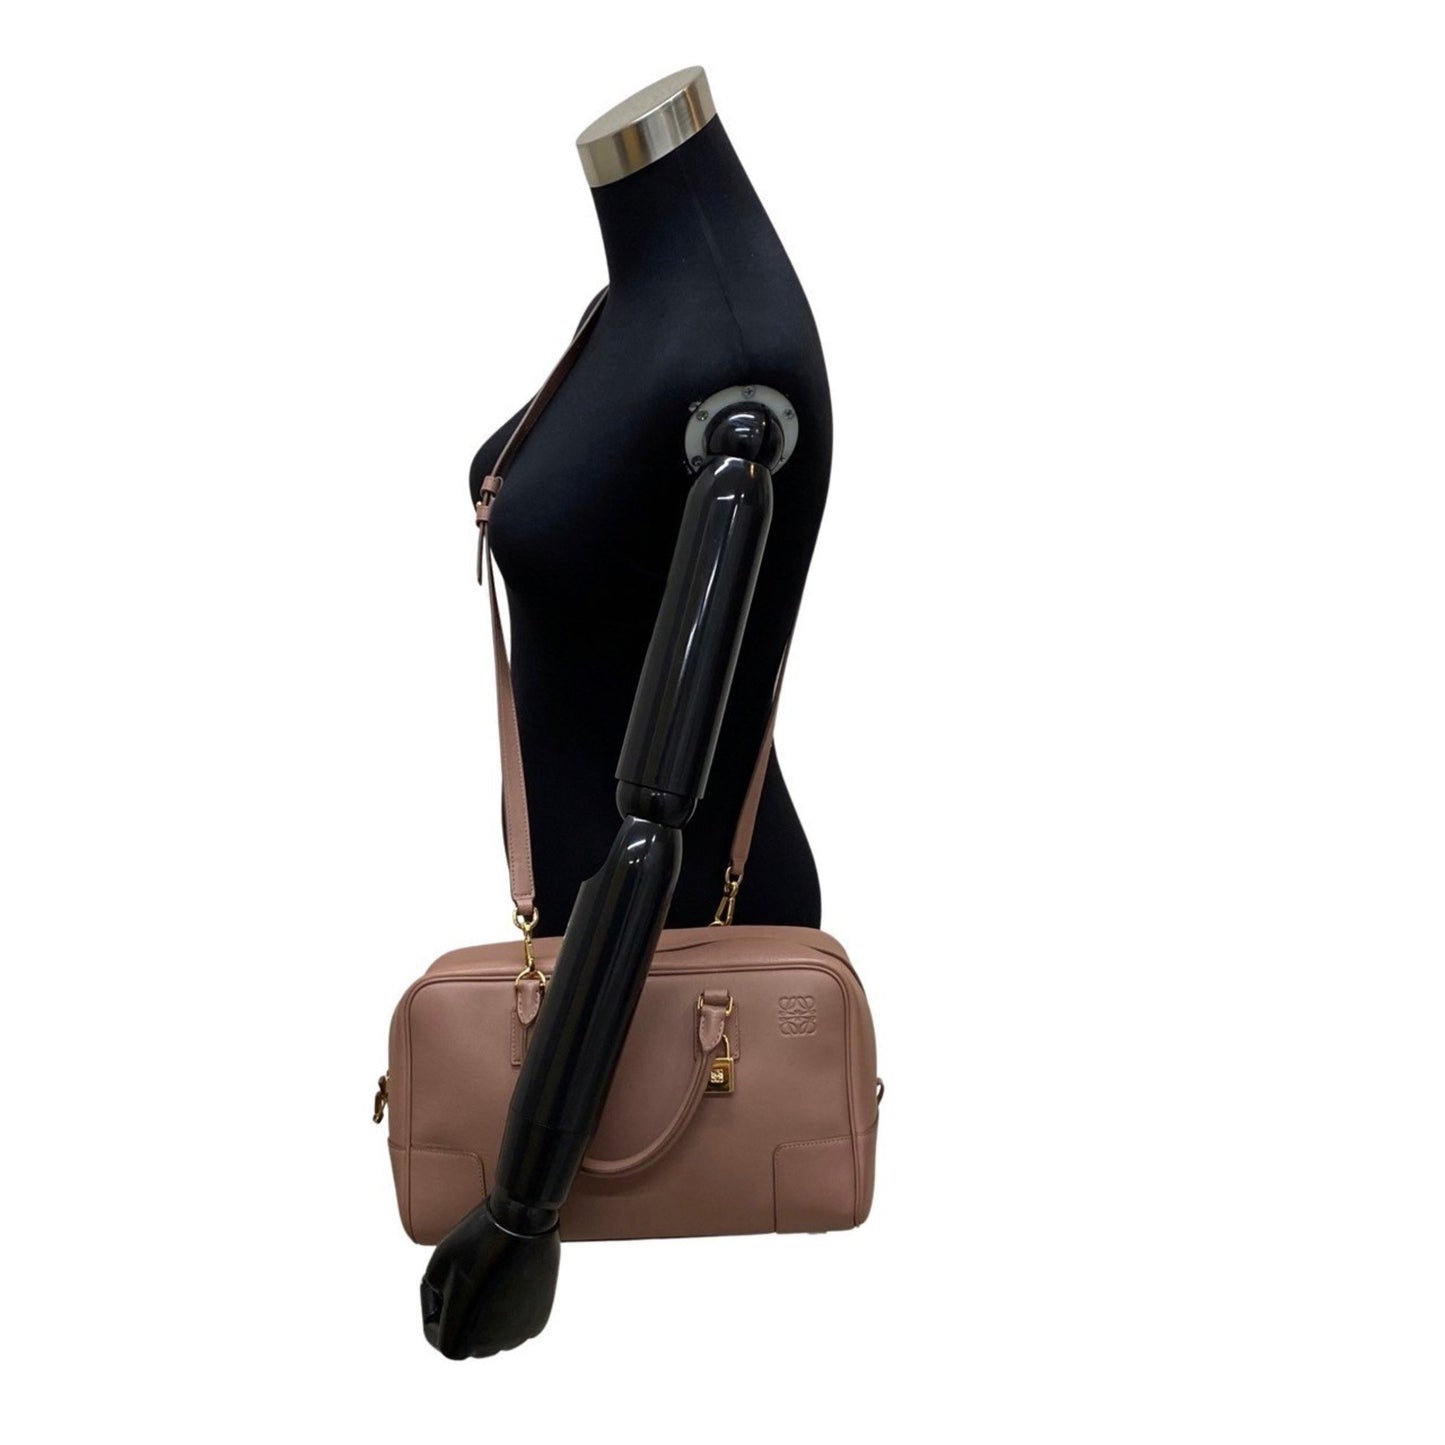 Loewe Women's Elegant Leather Handbag with Shoulder Strap in Beige